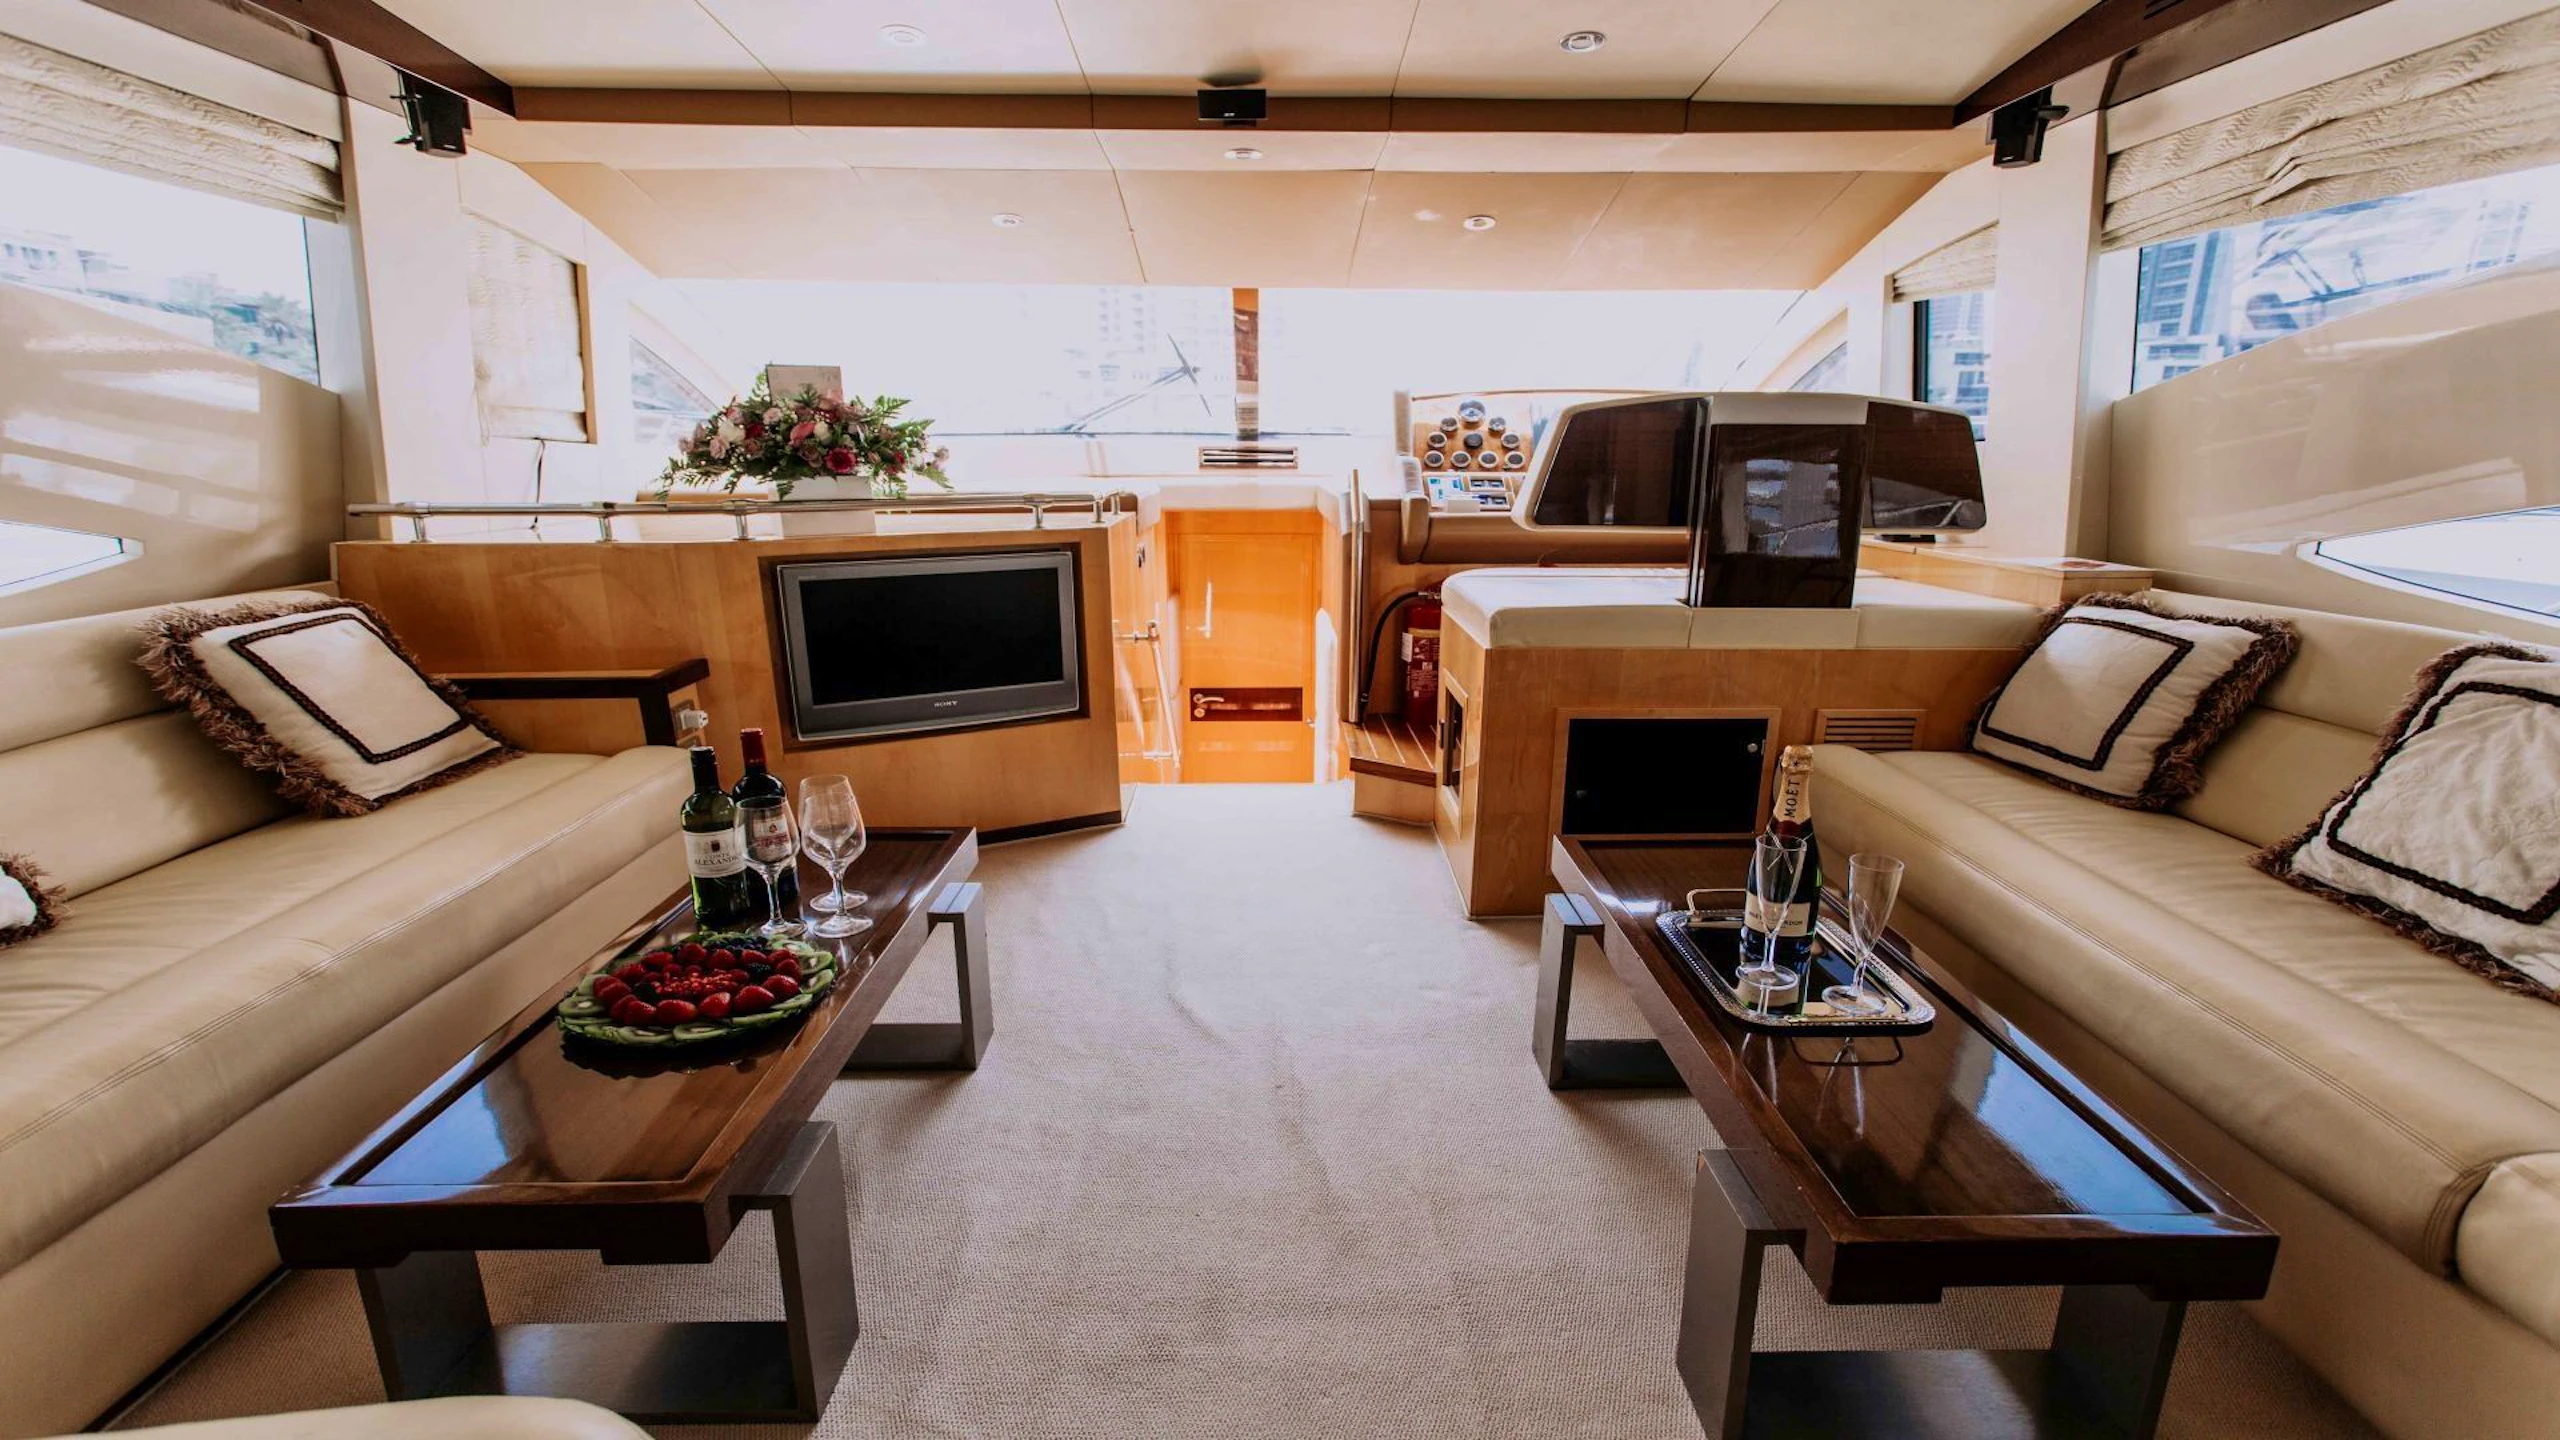 Rent a Luxury Yacht in Dubai - 56 ft Vassia Cruiser Price